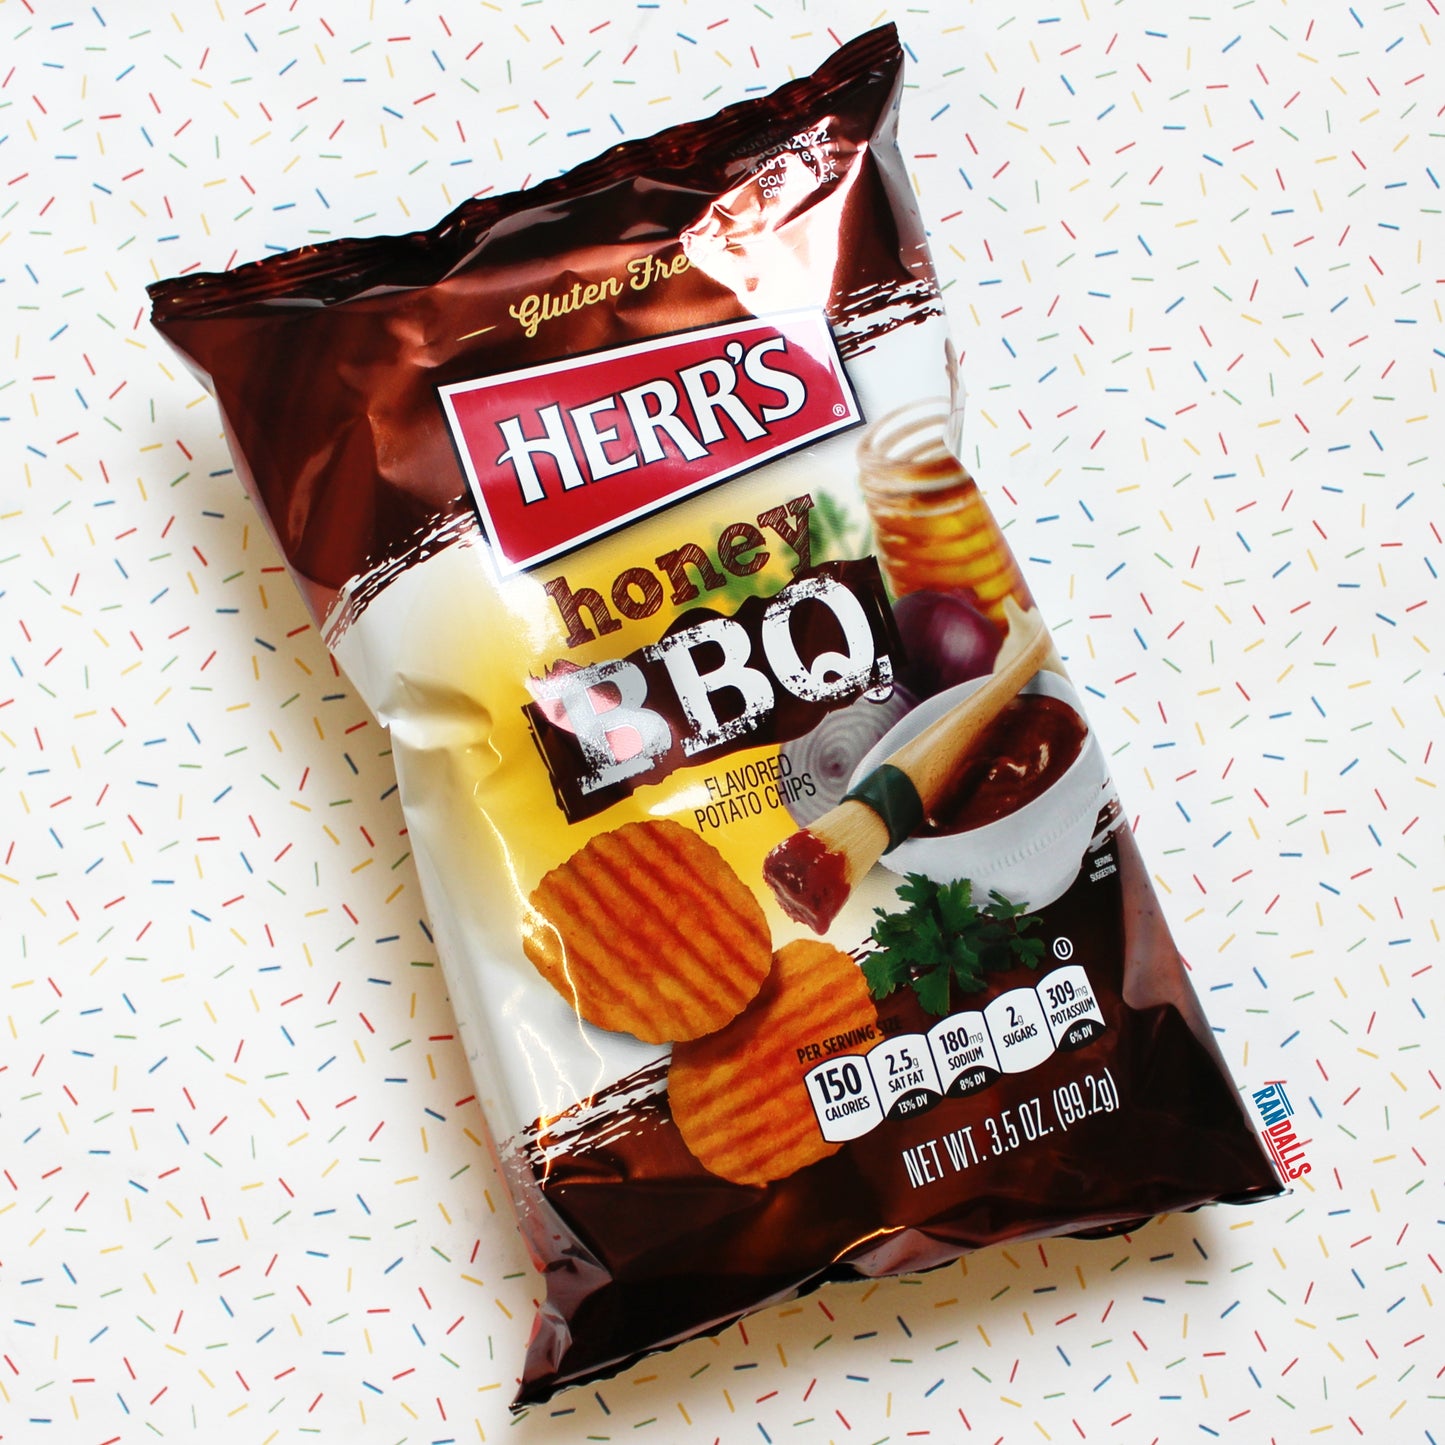 herr's herrs honey bbq, barbecue, barbeque, crisps, chips, ridged crisps, randalls